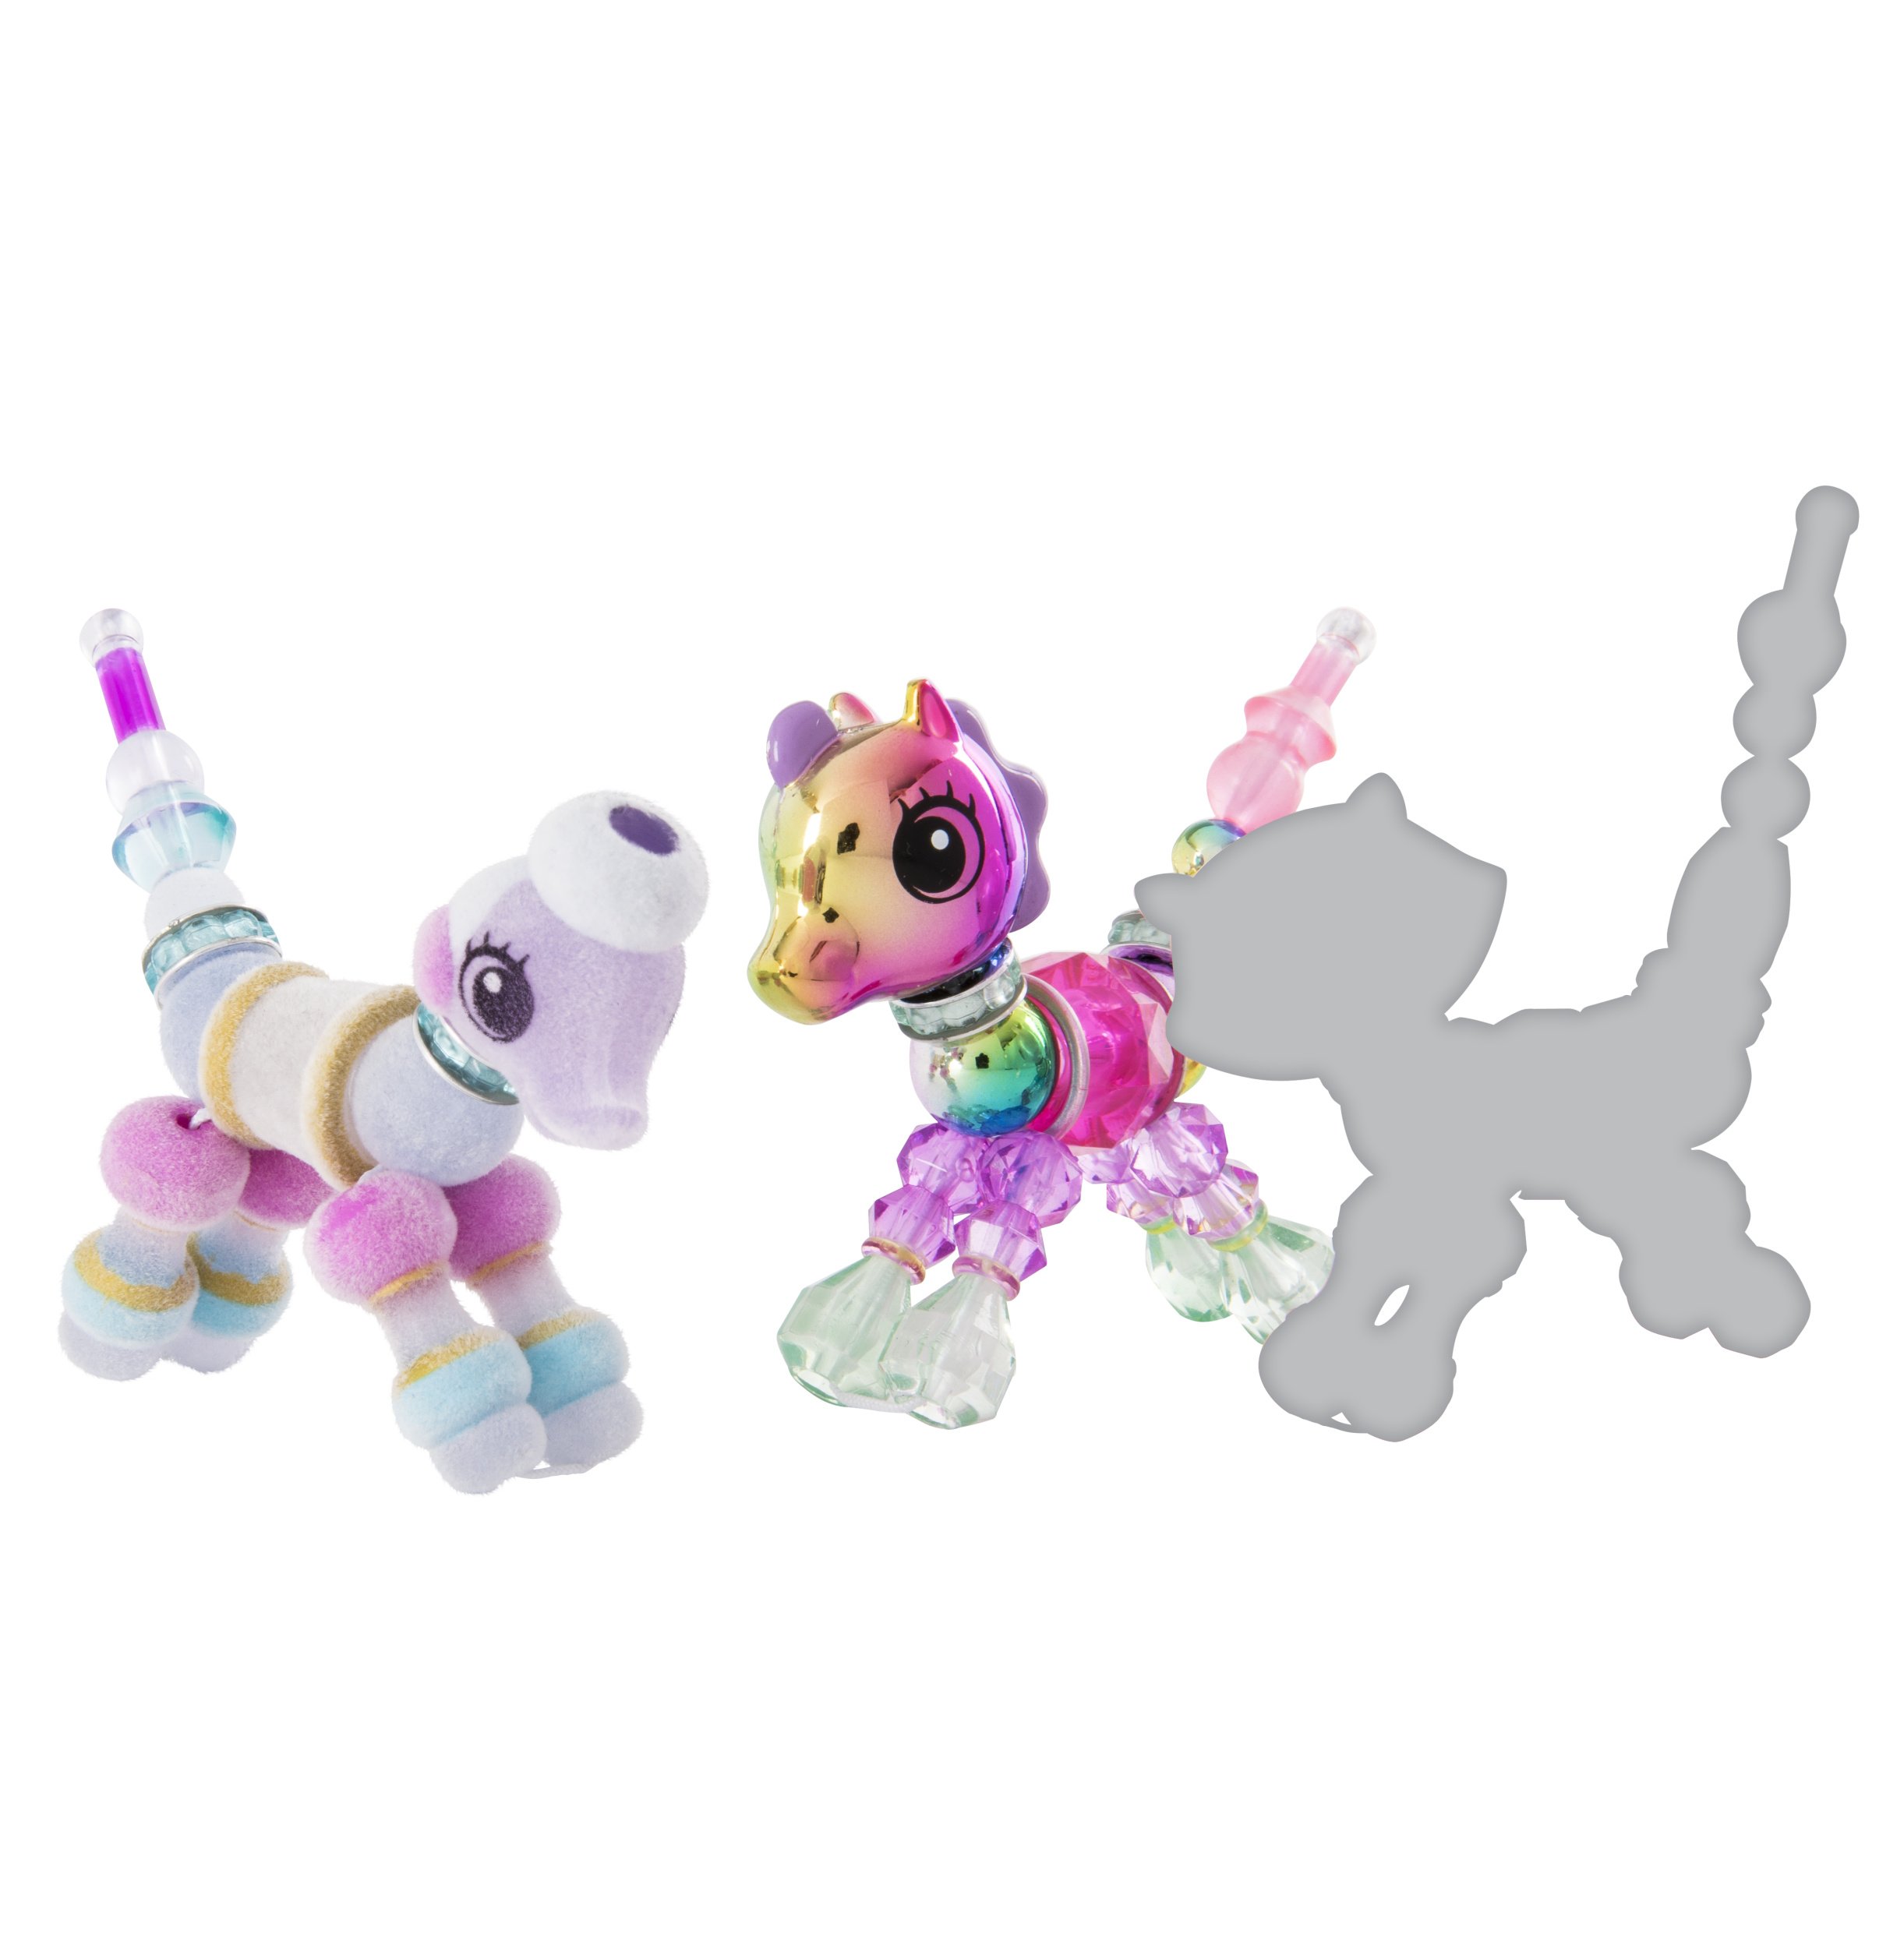 Twisty Petz - 3-Pack - Sunshiny Pony, Posie Poodle and Surprise Collectible Bracelet Set for Kids